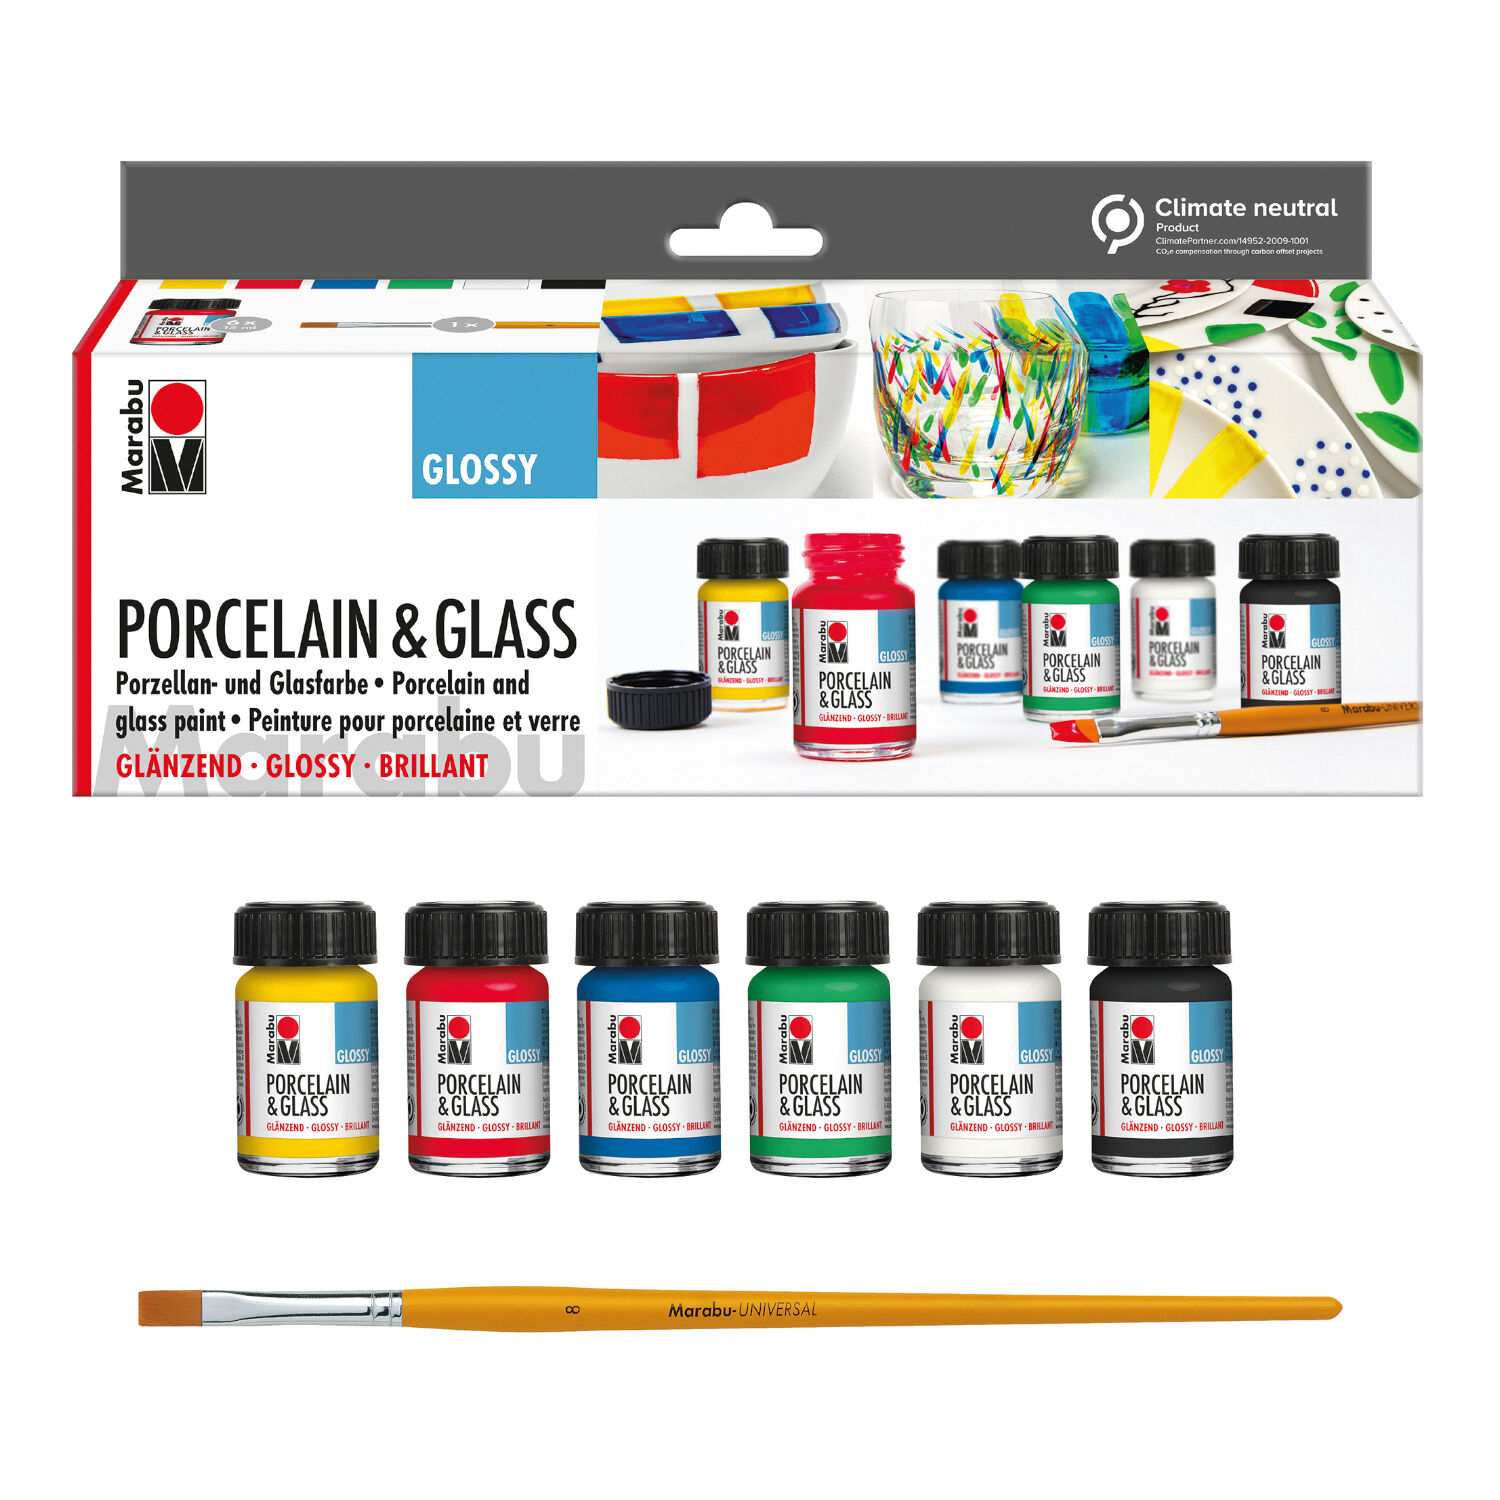 NEU Porcelain & Glass Glossy, glnzende Glasmalfarbe / Porzellanfarbe Starterset, 6 x 15 ml, inklusive Pinsel Bild 2